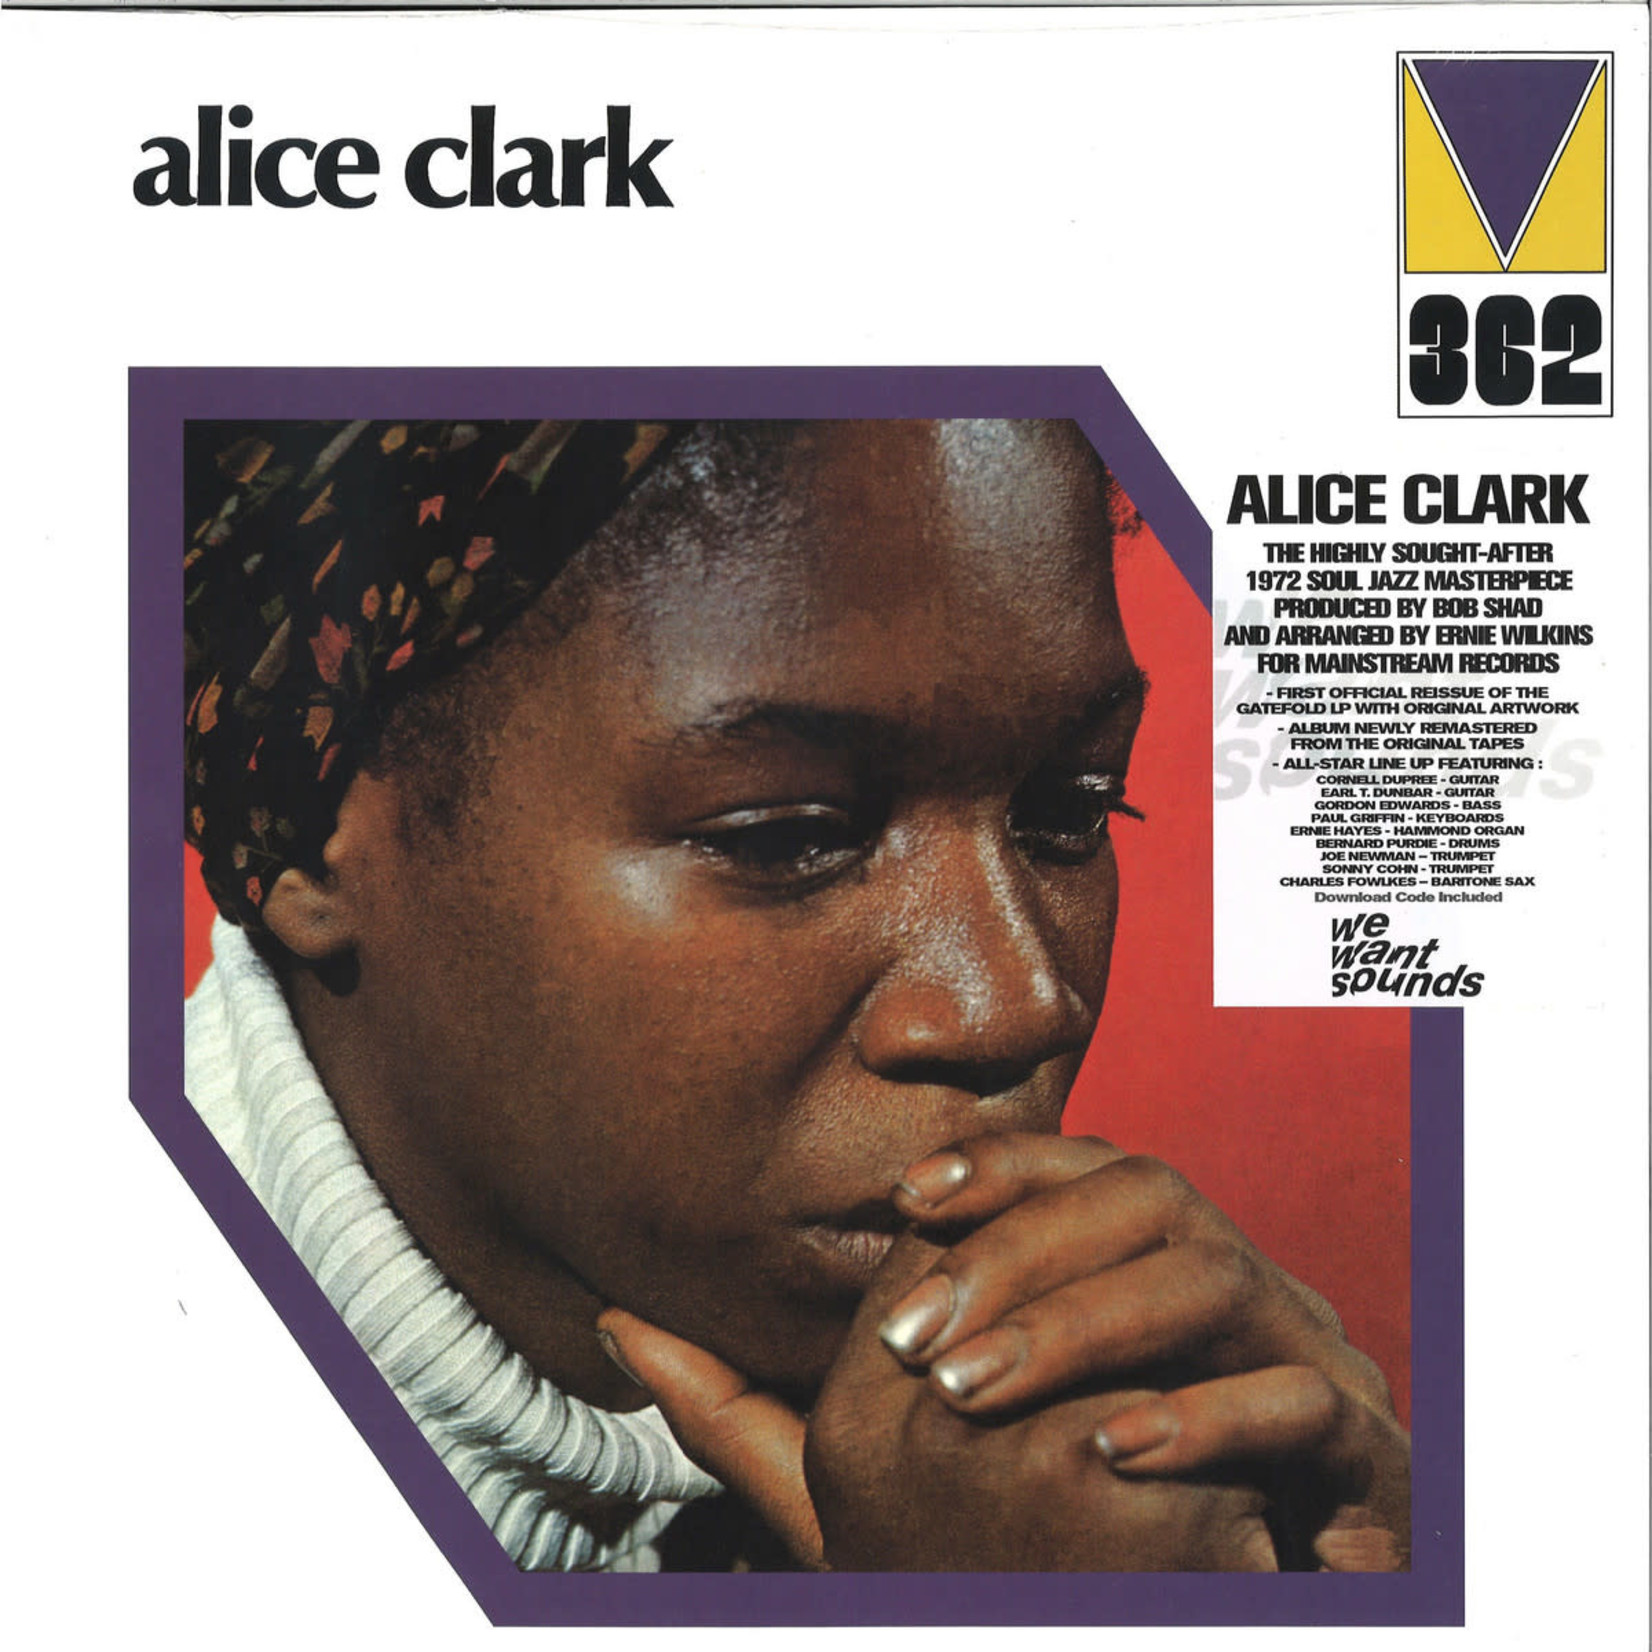 [New] Alice Clark - Alice Clark